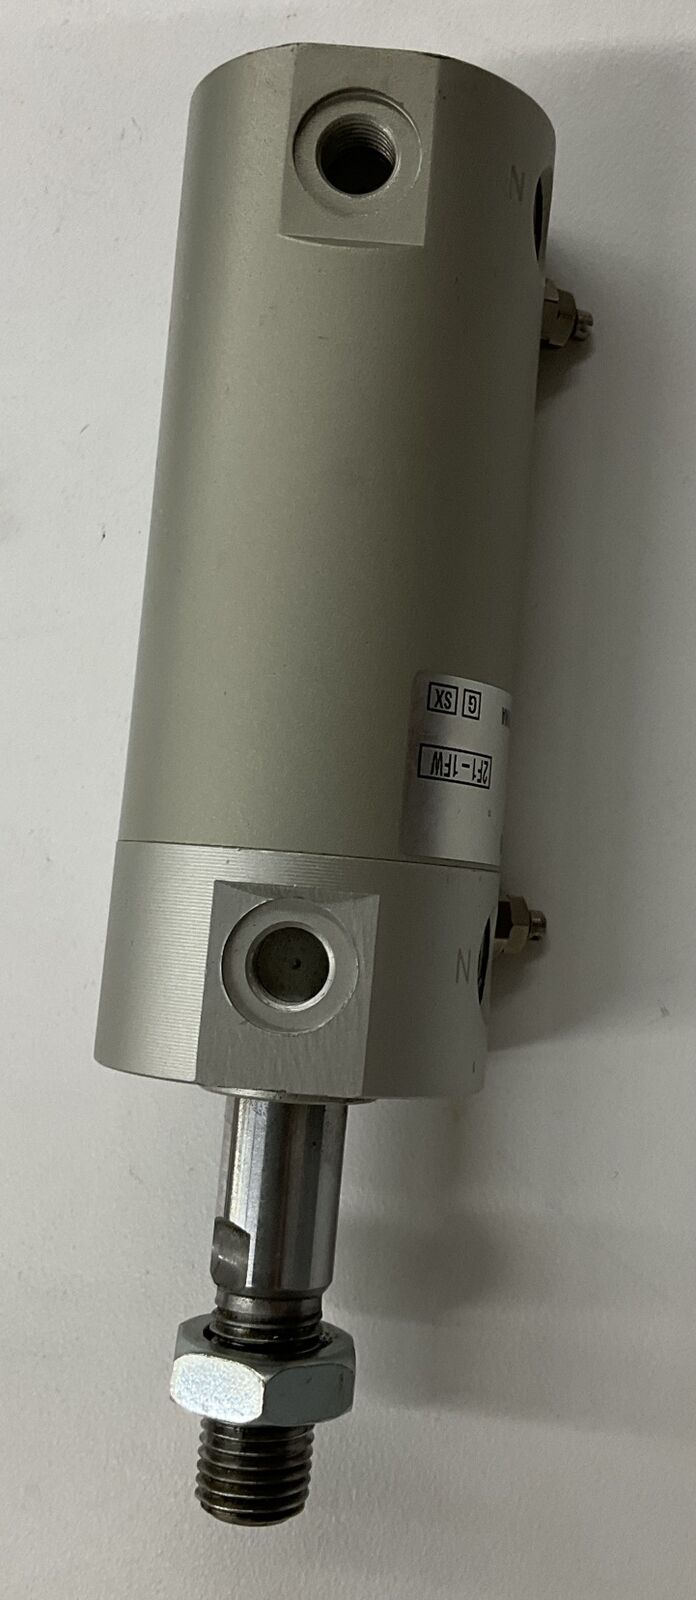 SMC NCDGBA32-0100 Round Body Cylinder (BL274)